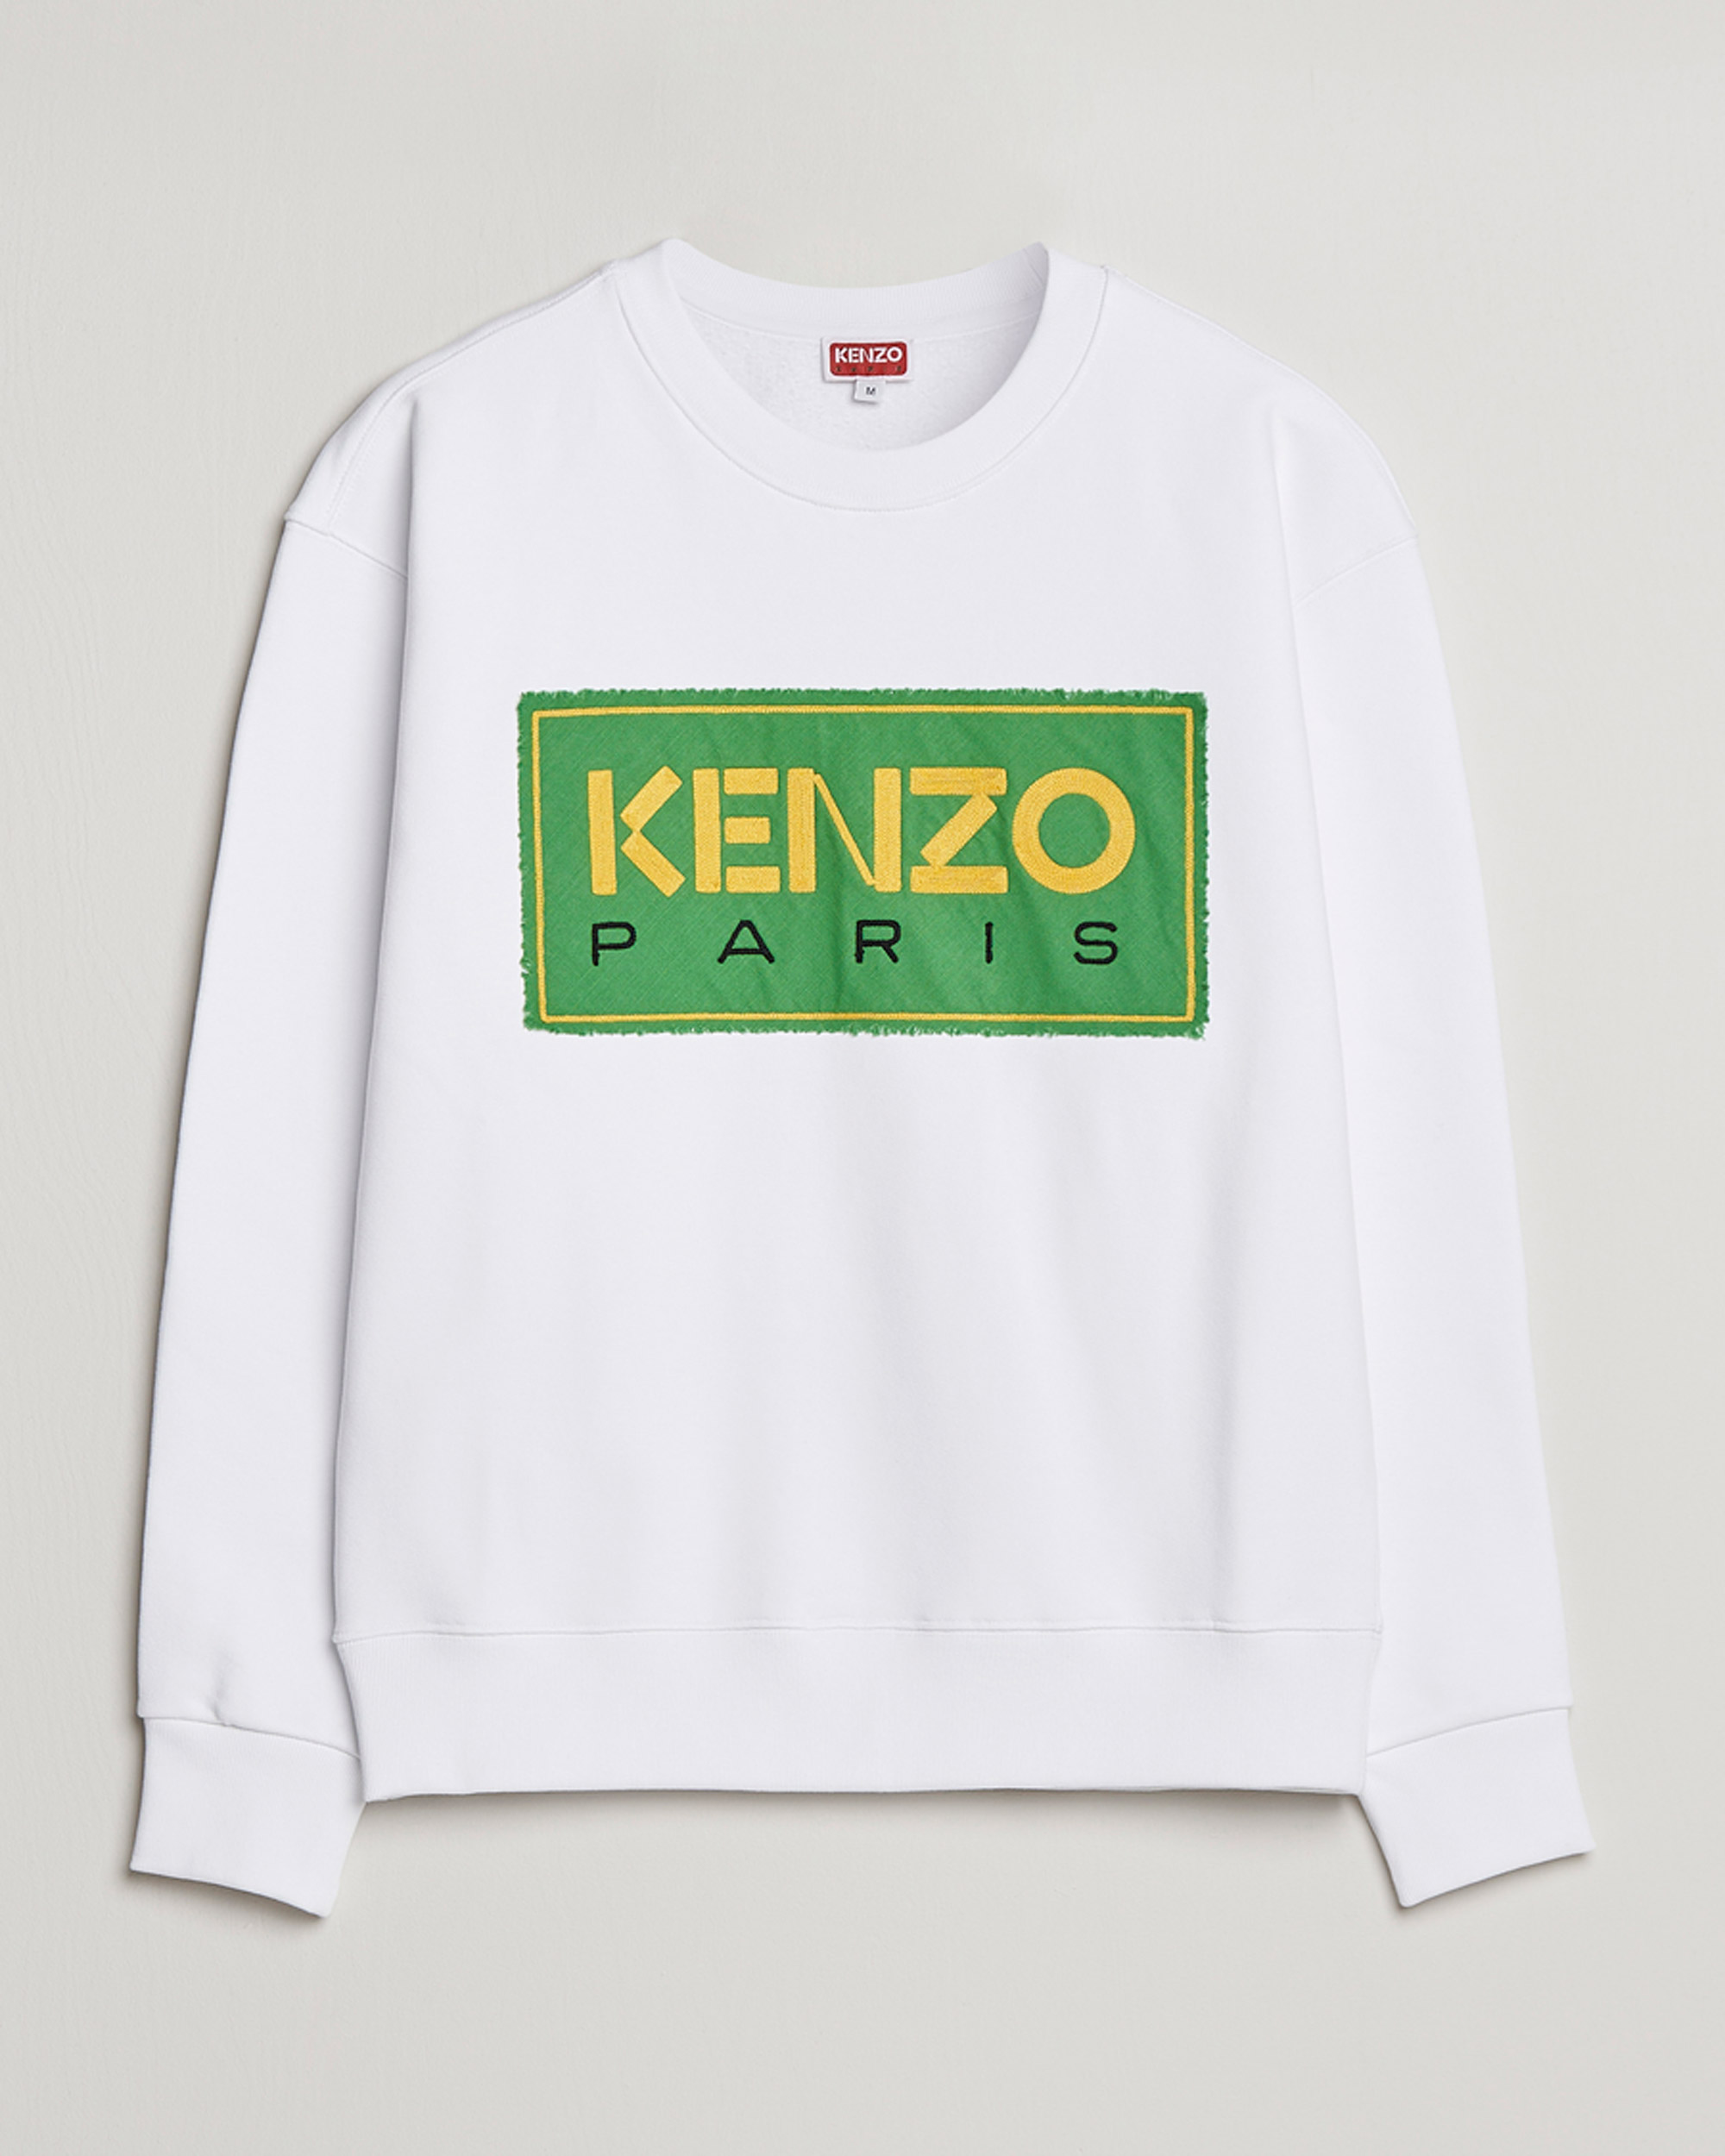 KENZO Kenzo Paris Classic Sweatshirt White at CareOfCarl.com